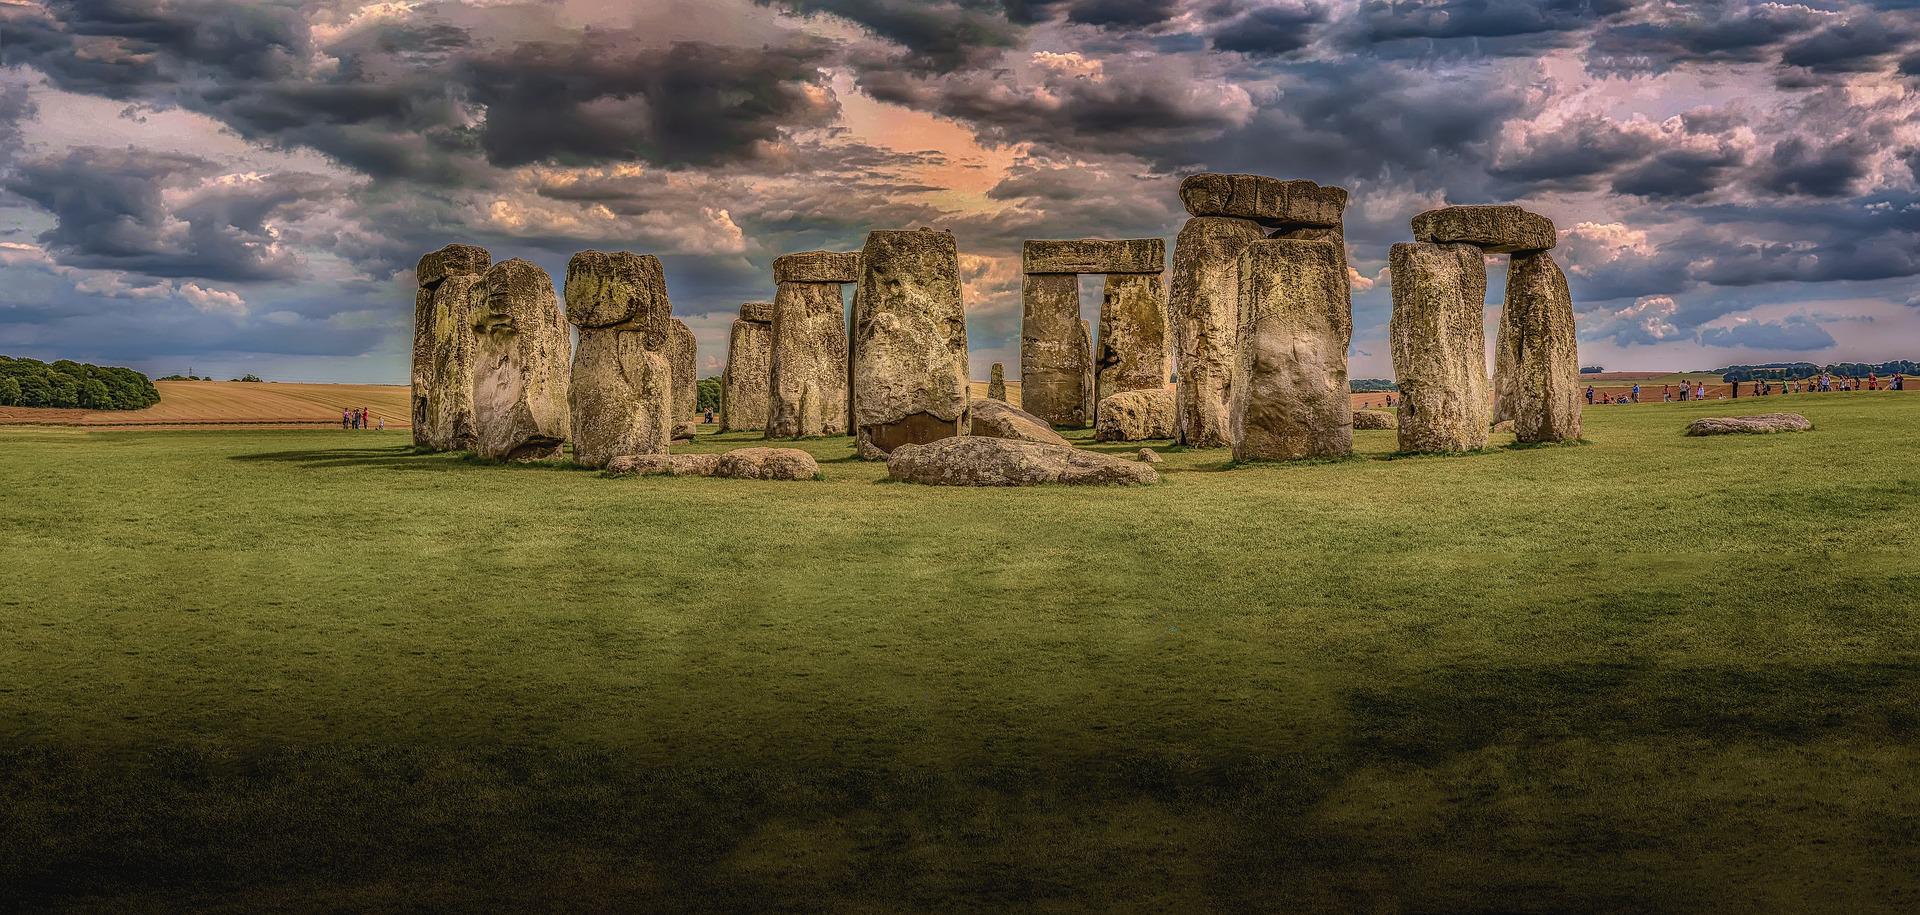 Where Stonehenge? What was Stonehenge? History of the Stonehenge: